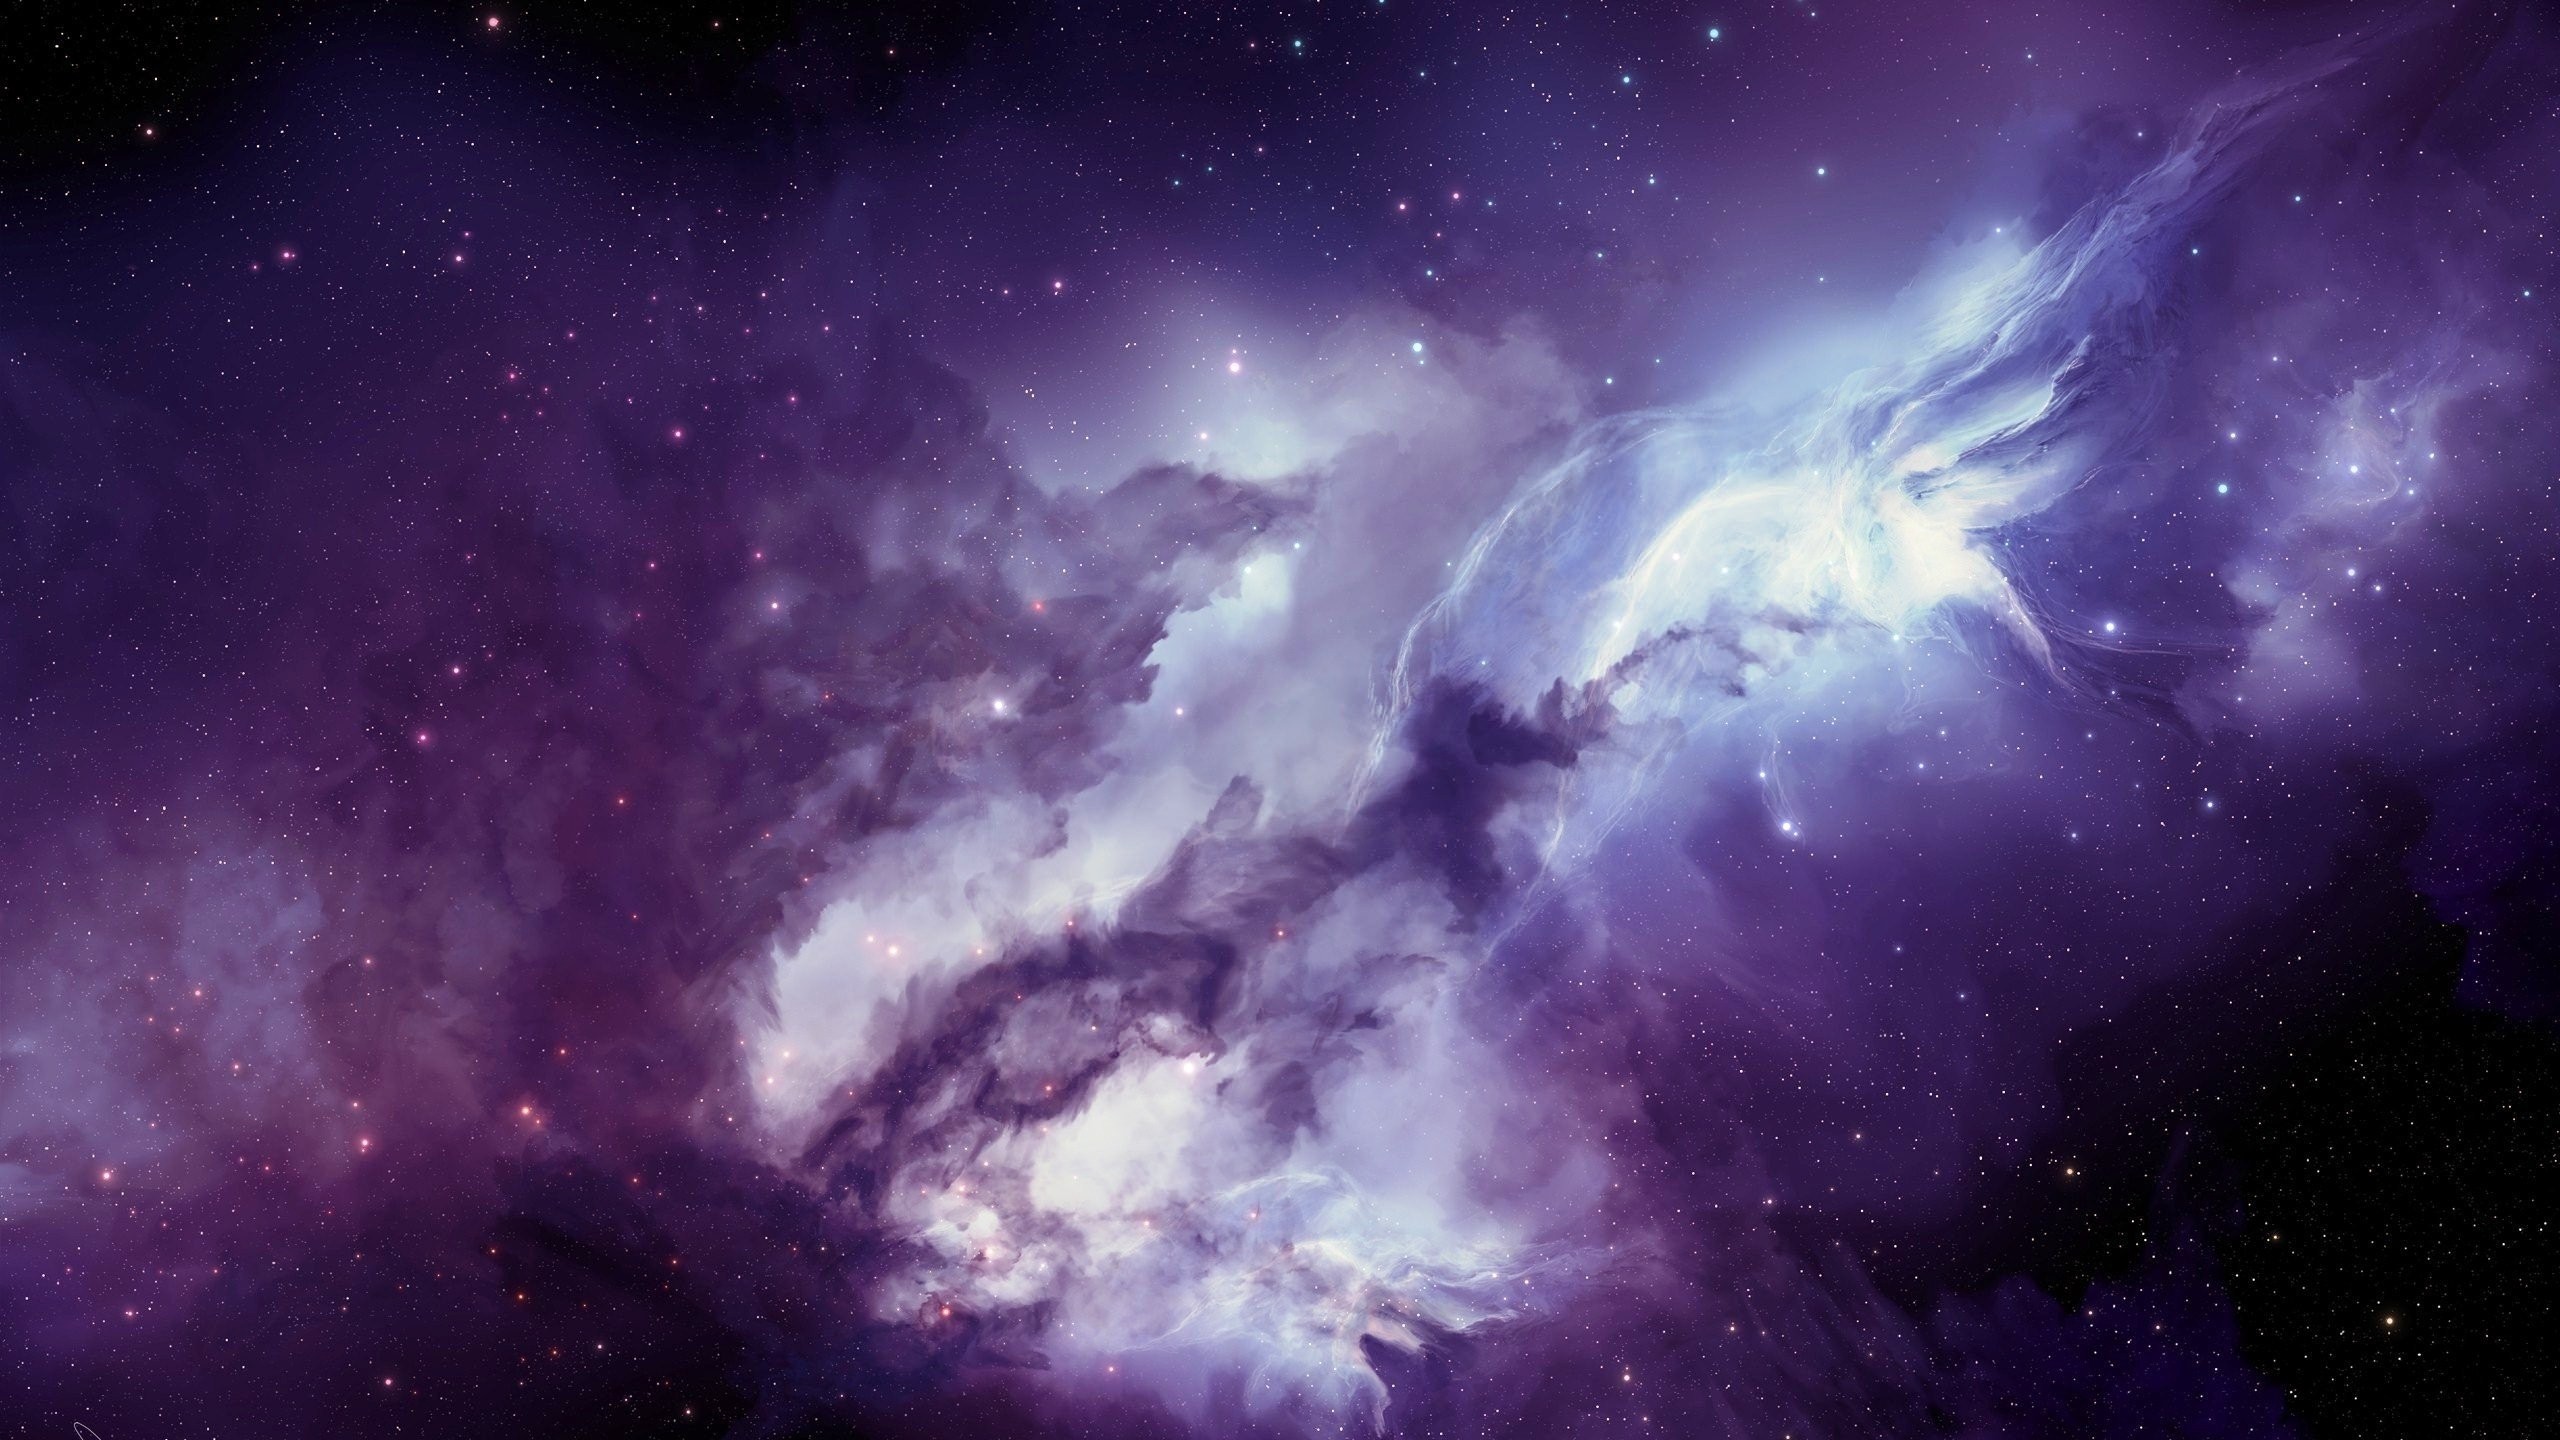 Deep Space Nebula Wallpaper for Desktop 2560x1440